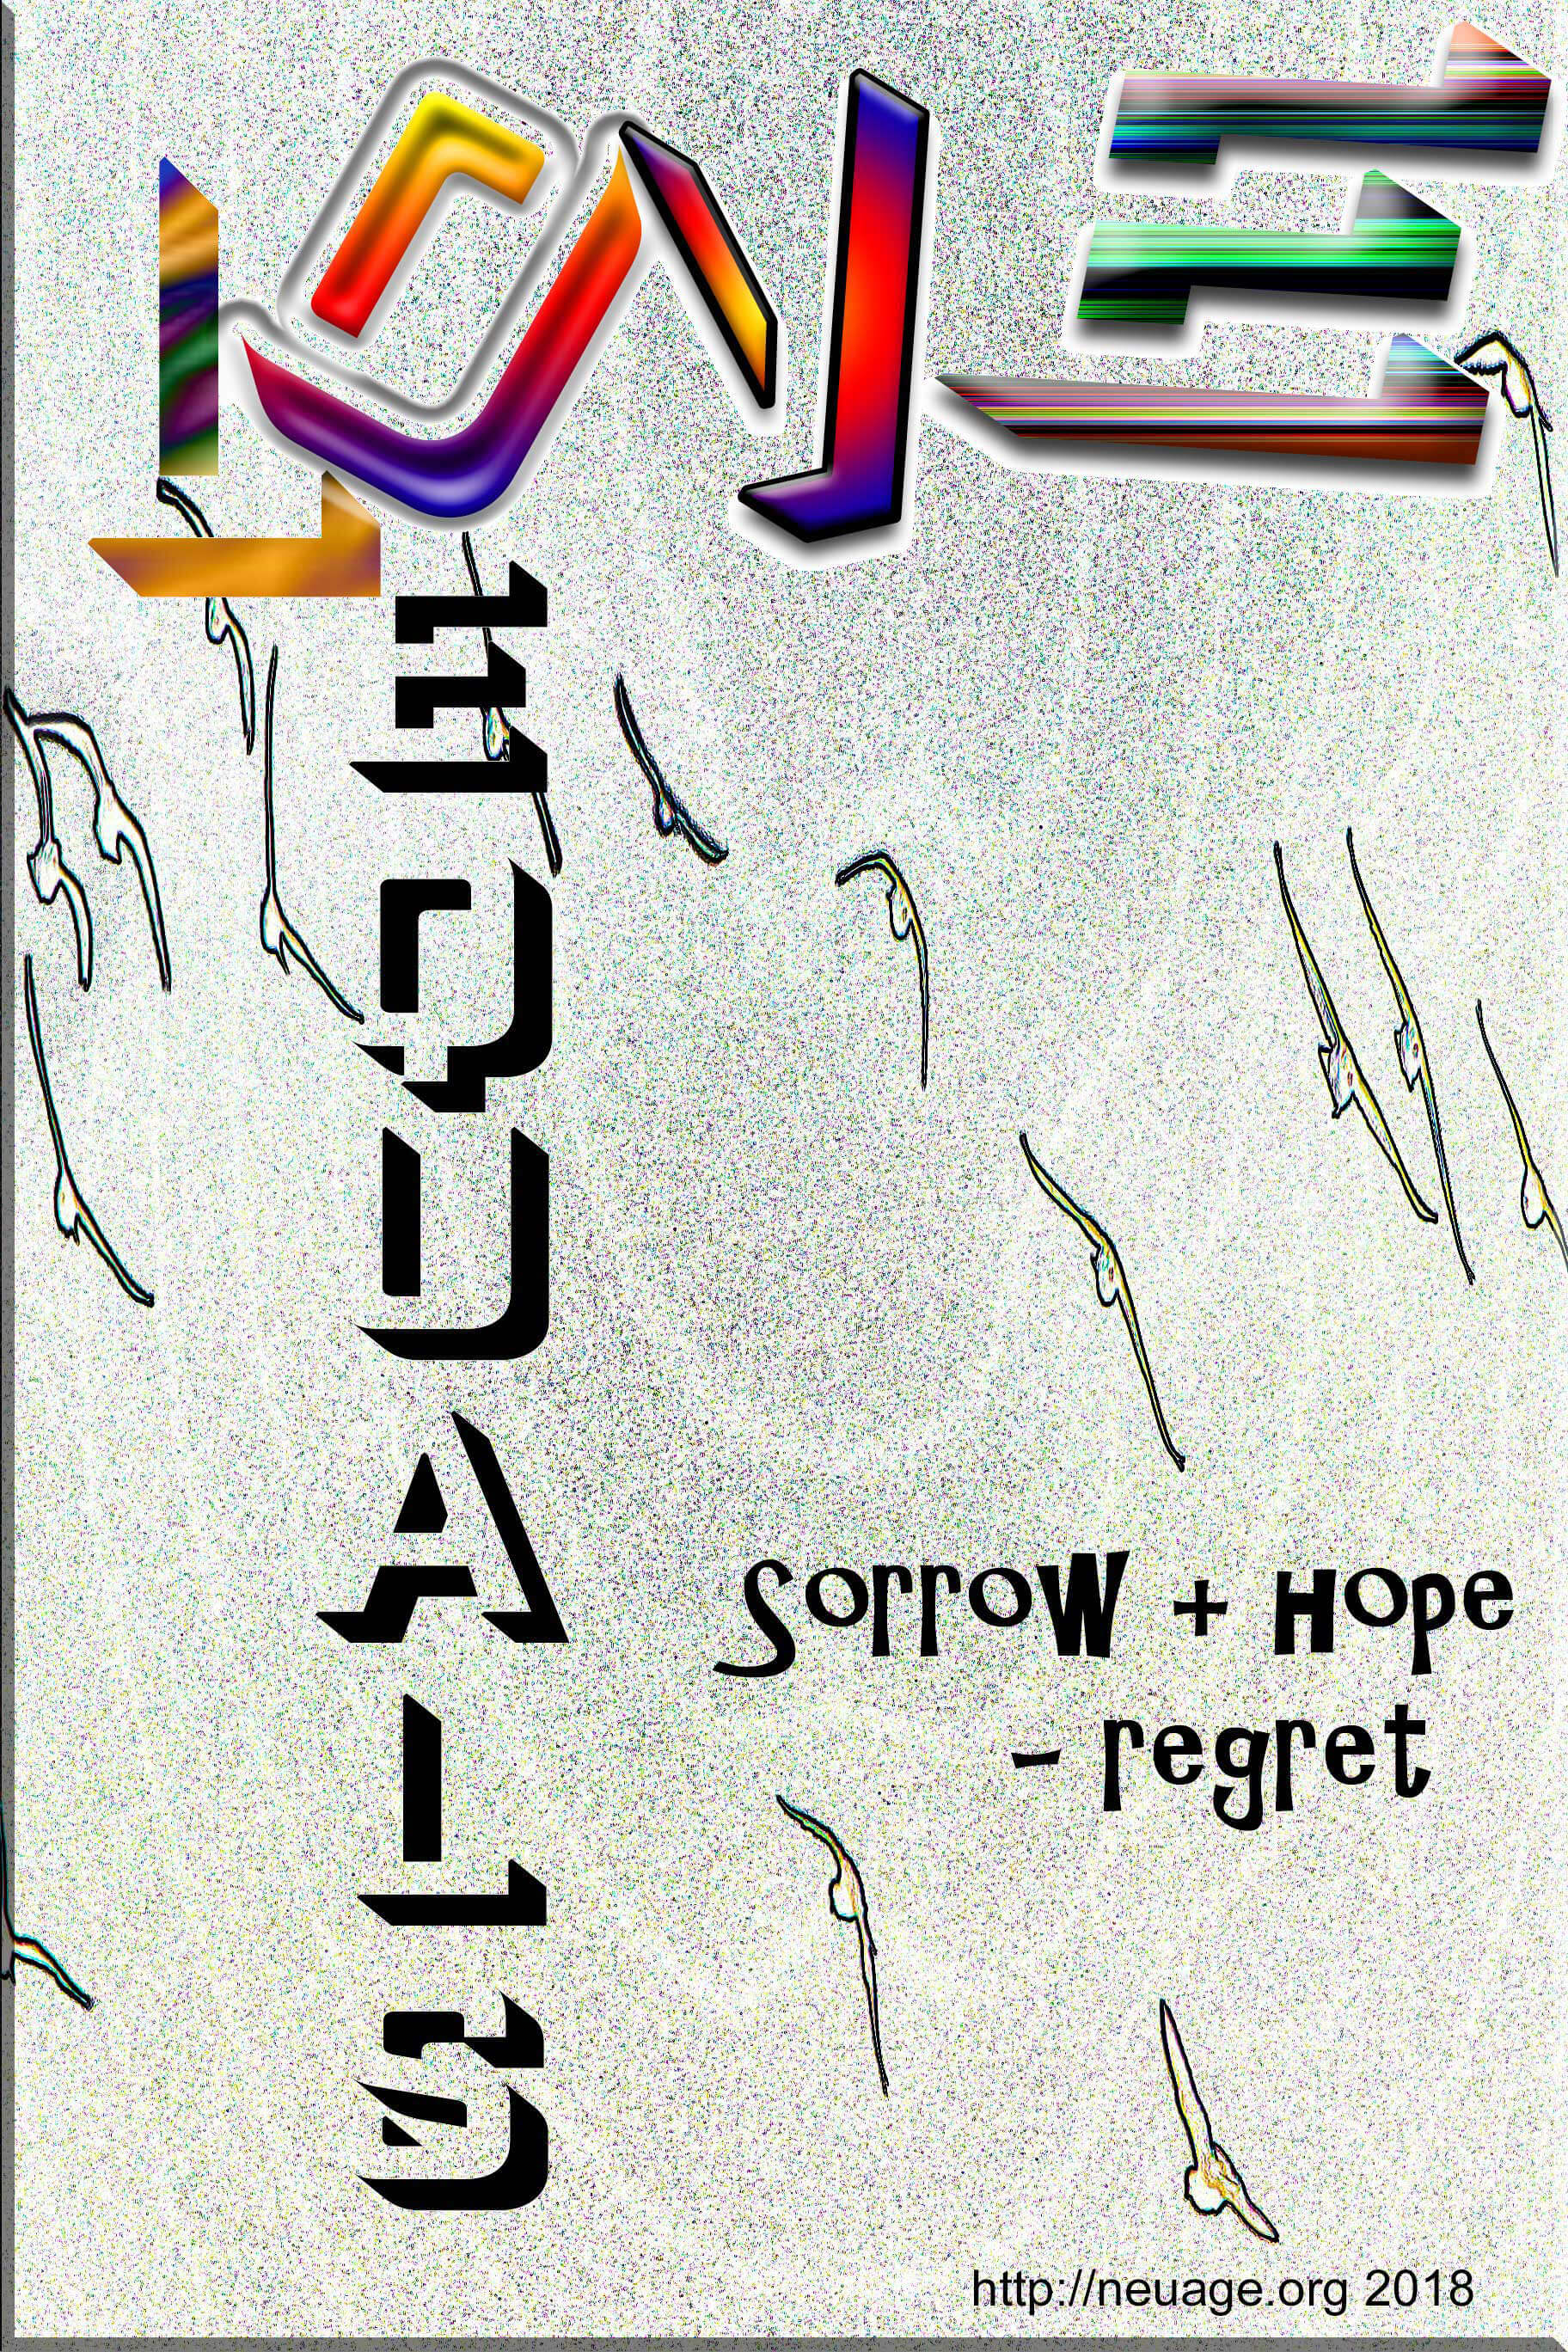 Love equals

Sorrow + hope - regret

02/05/2018